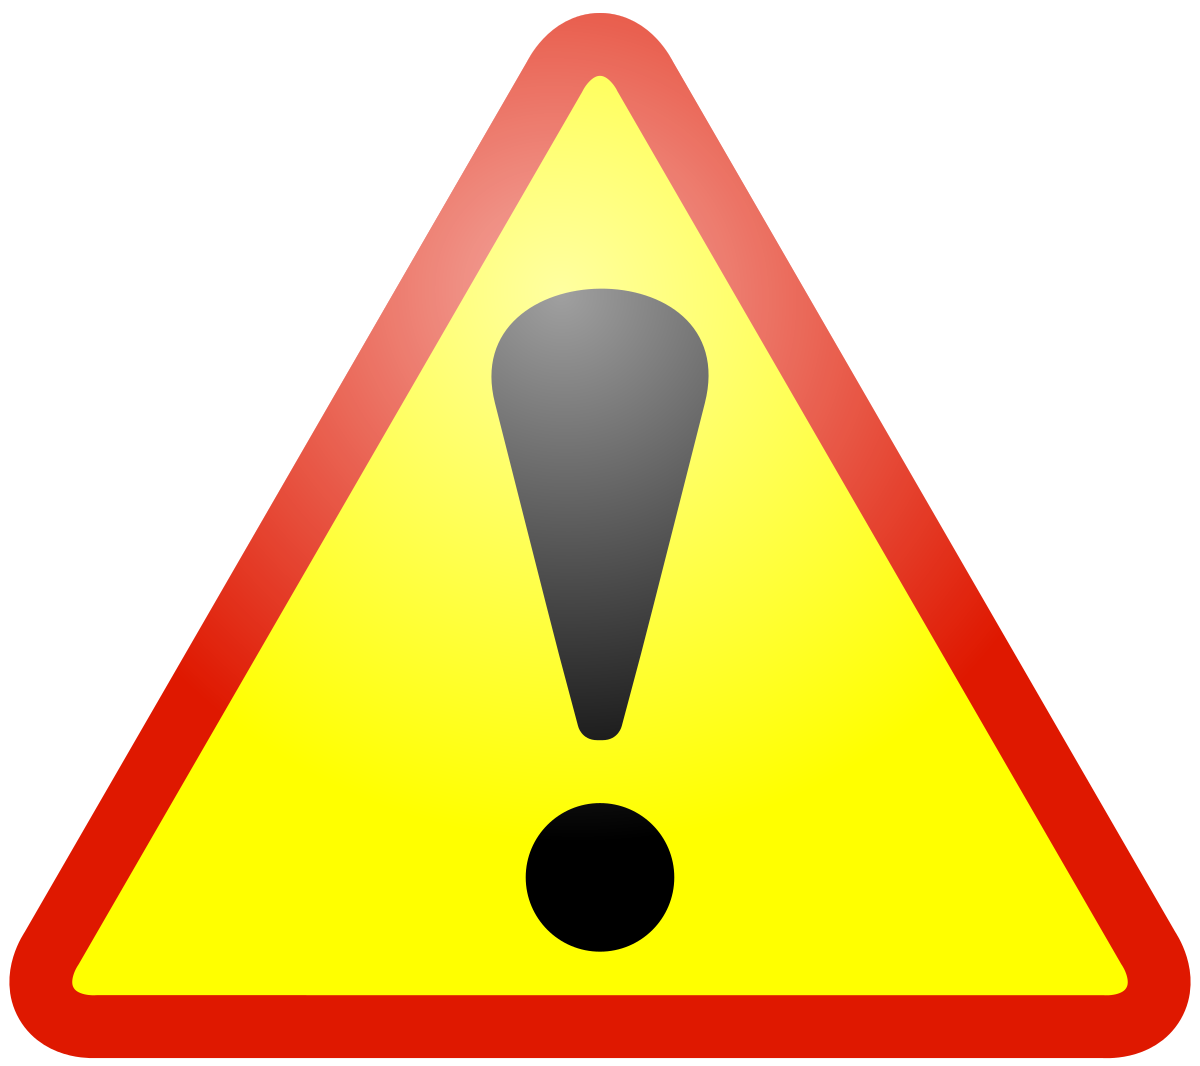 Lock icon with warning symbol